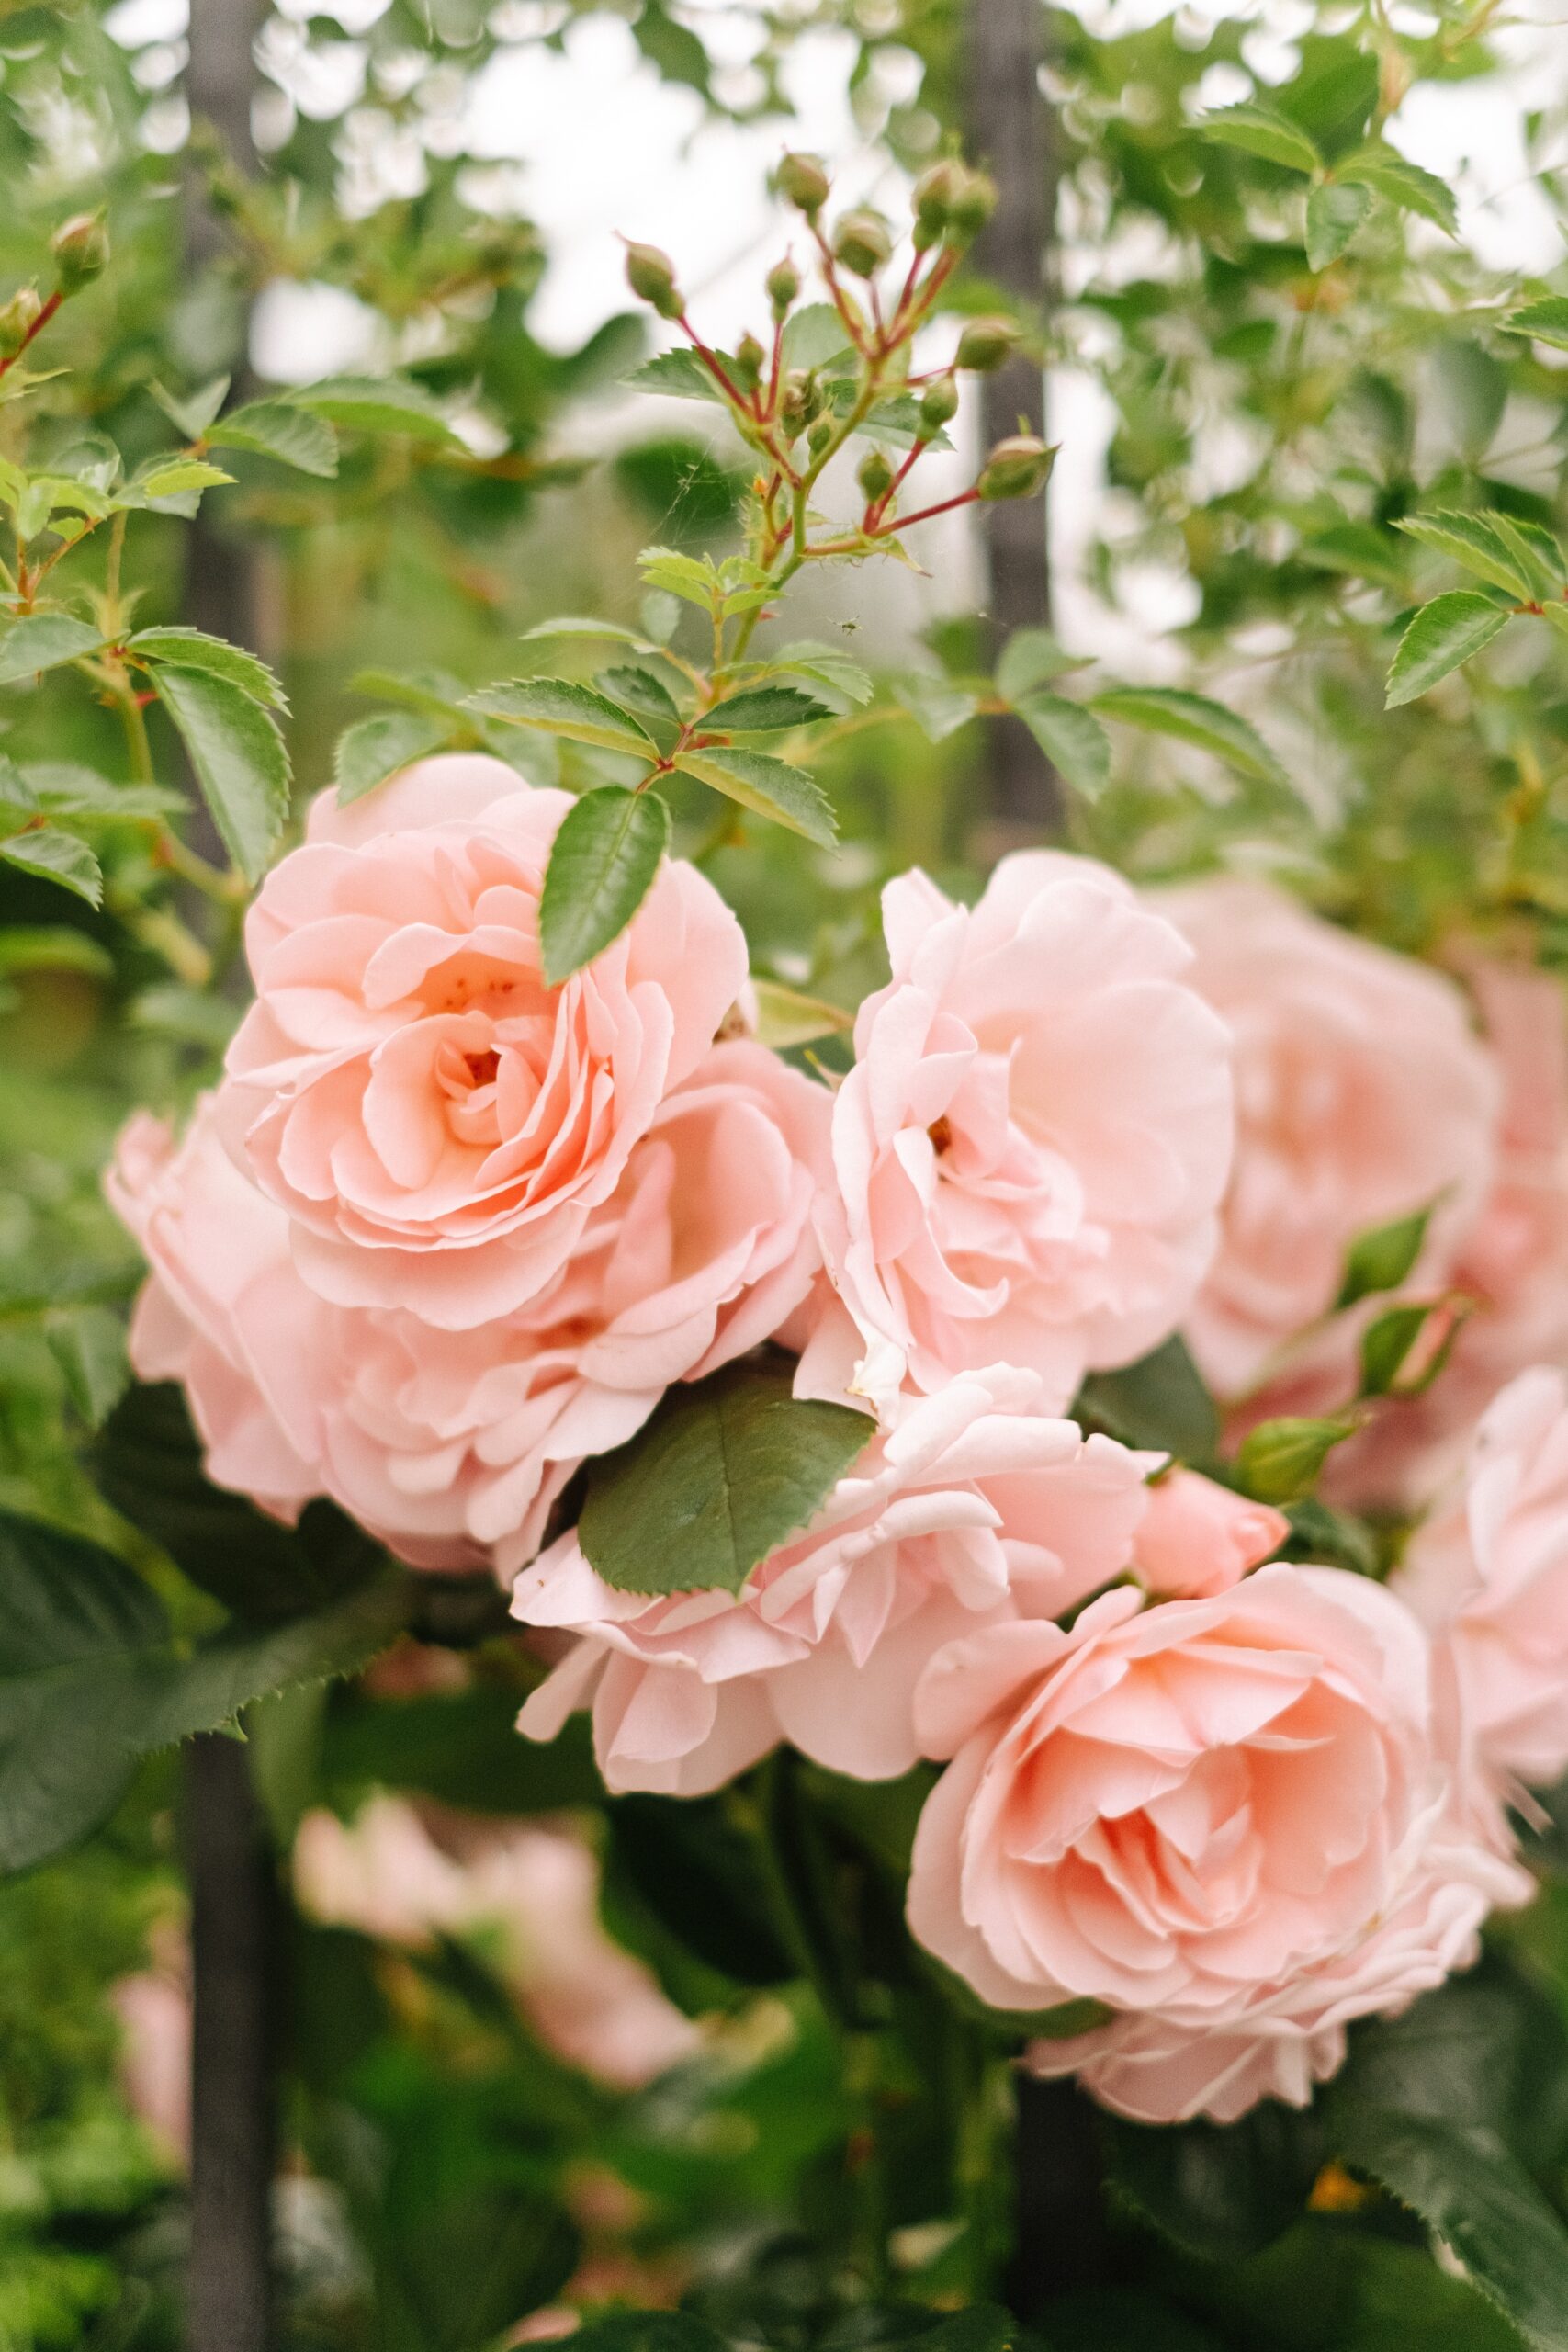 Photo by Ivan Samkov: https://www.pexels.com/photo/elegant-roses-in-bloom-4899528/